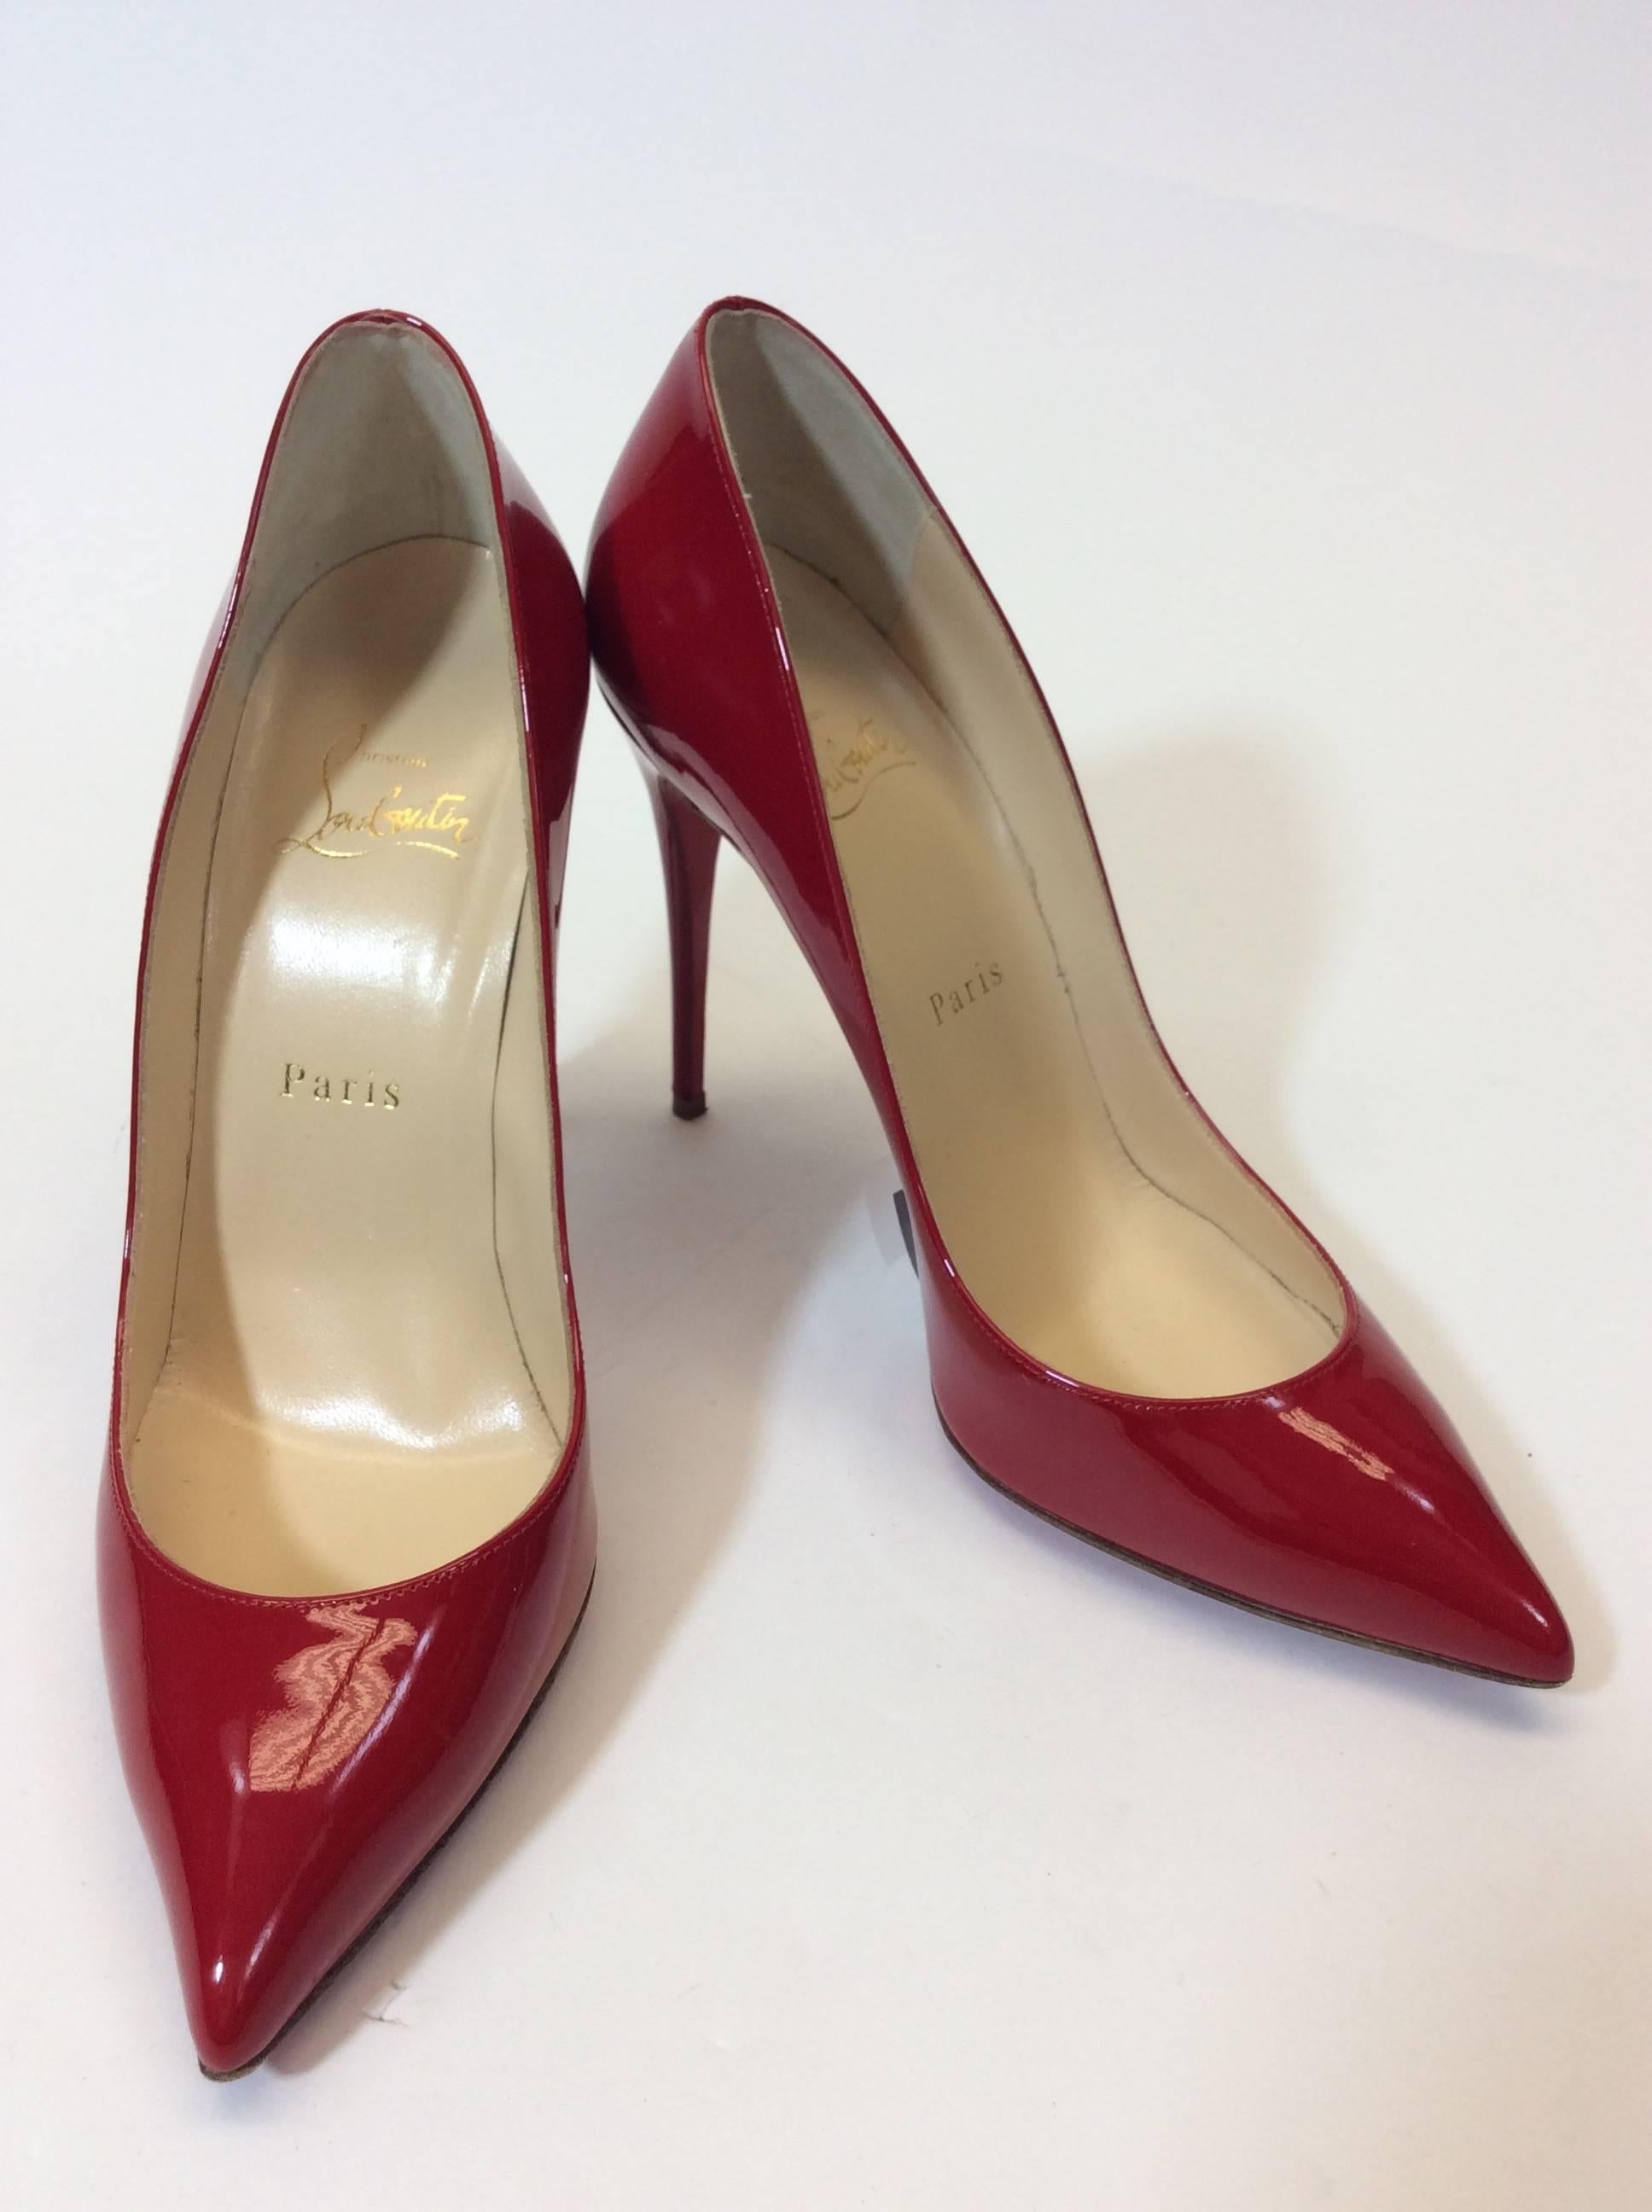 Red Patent Leather Stiletto 
Pointed toe 
Superfine Stiletto Heel
3.5